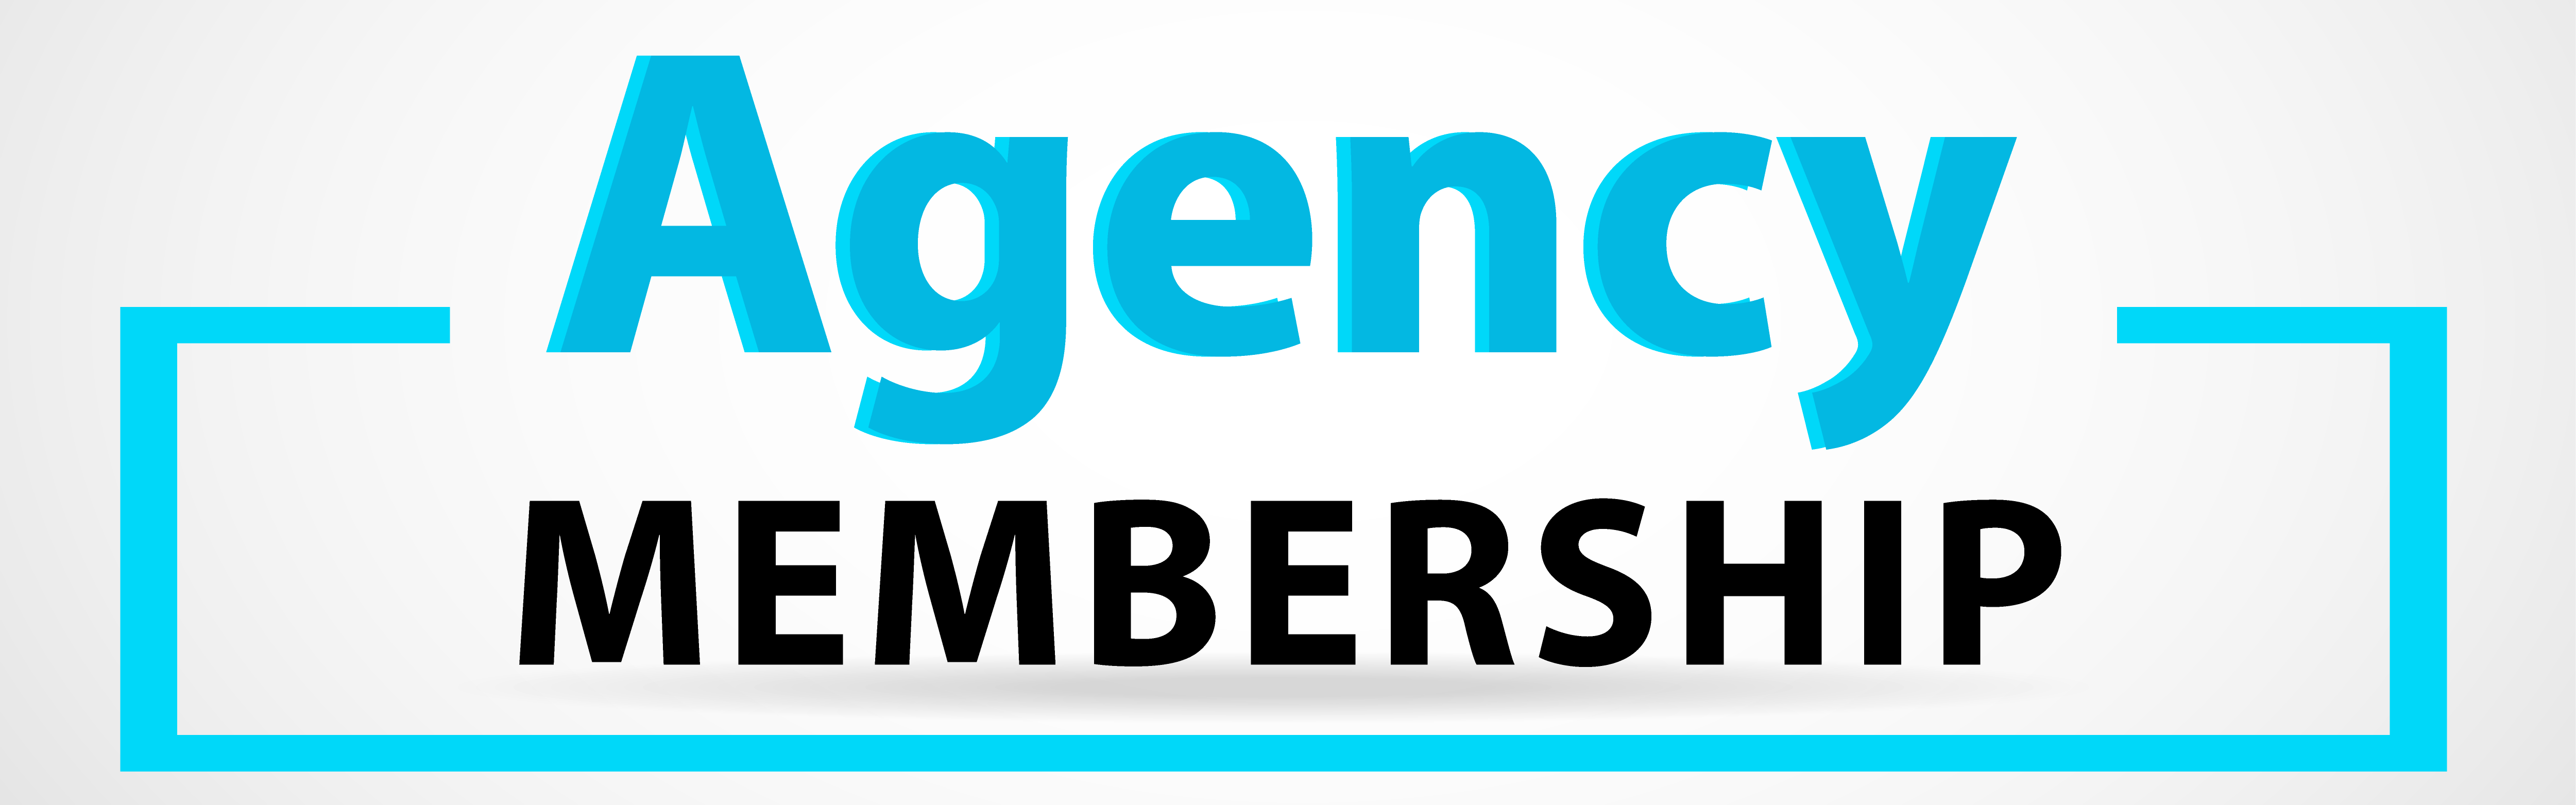 agency-membership-banner-02.png